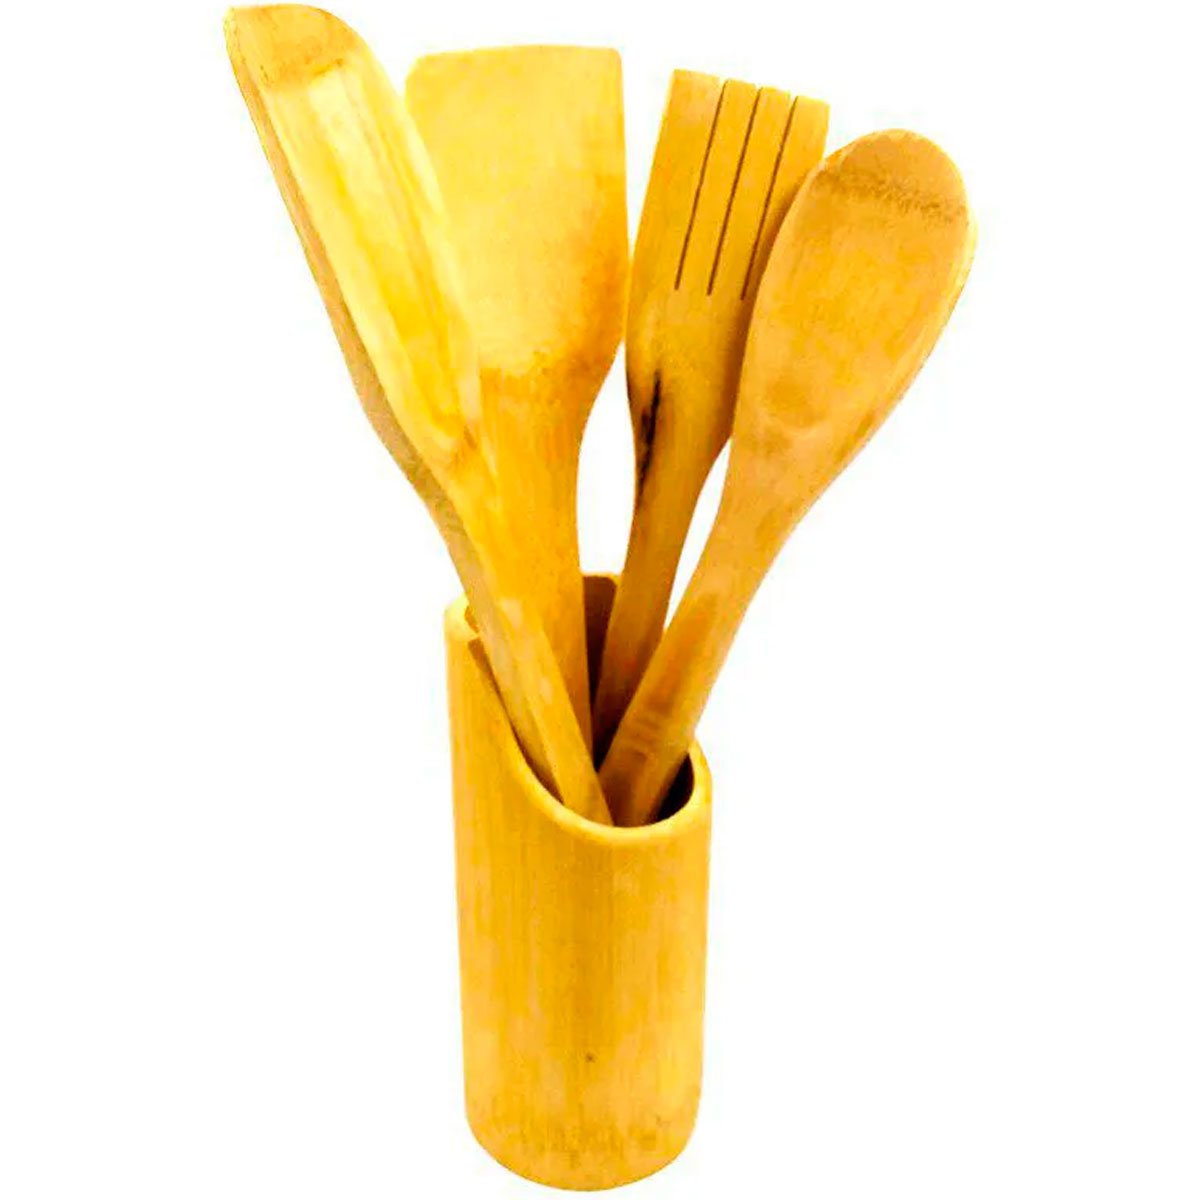 02 conjunto kit 5 utensilios de madeira bambu ecologico